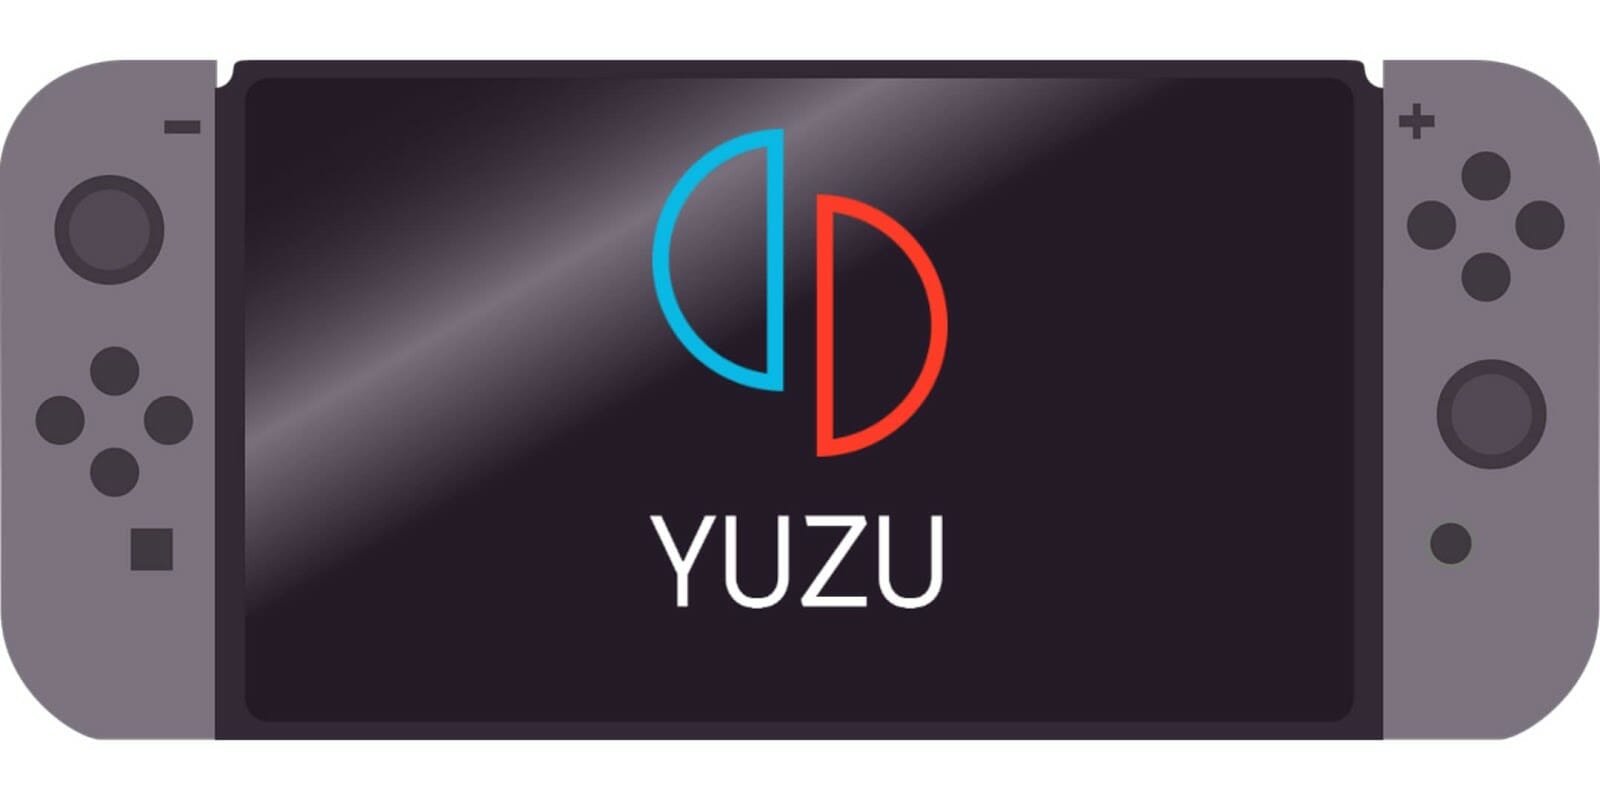 minimum specs to run yuzu emulator